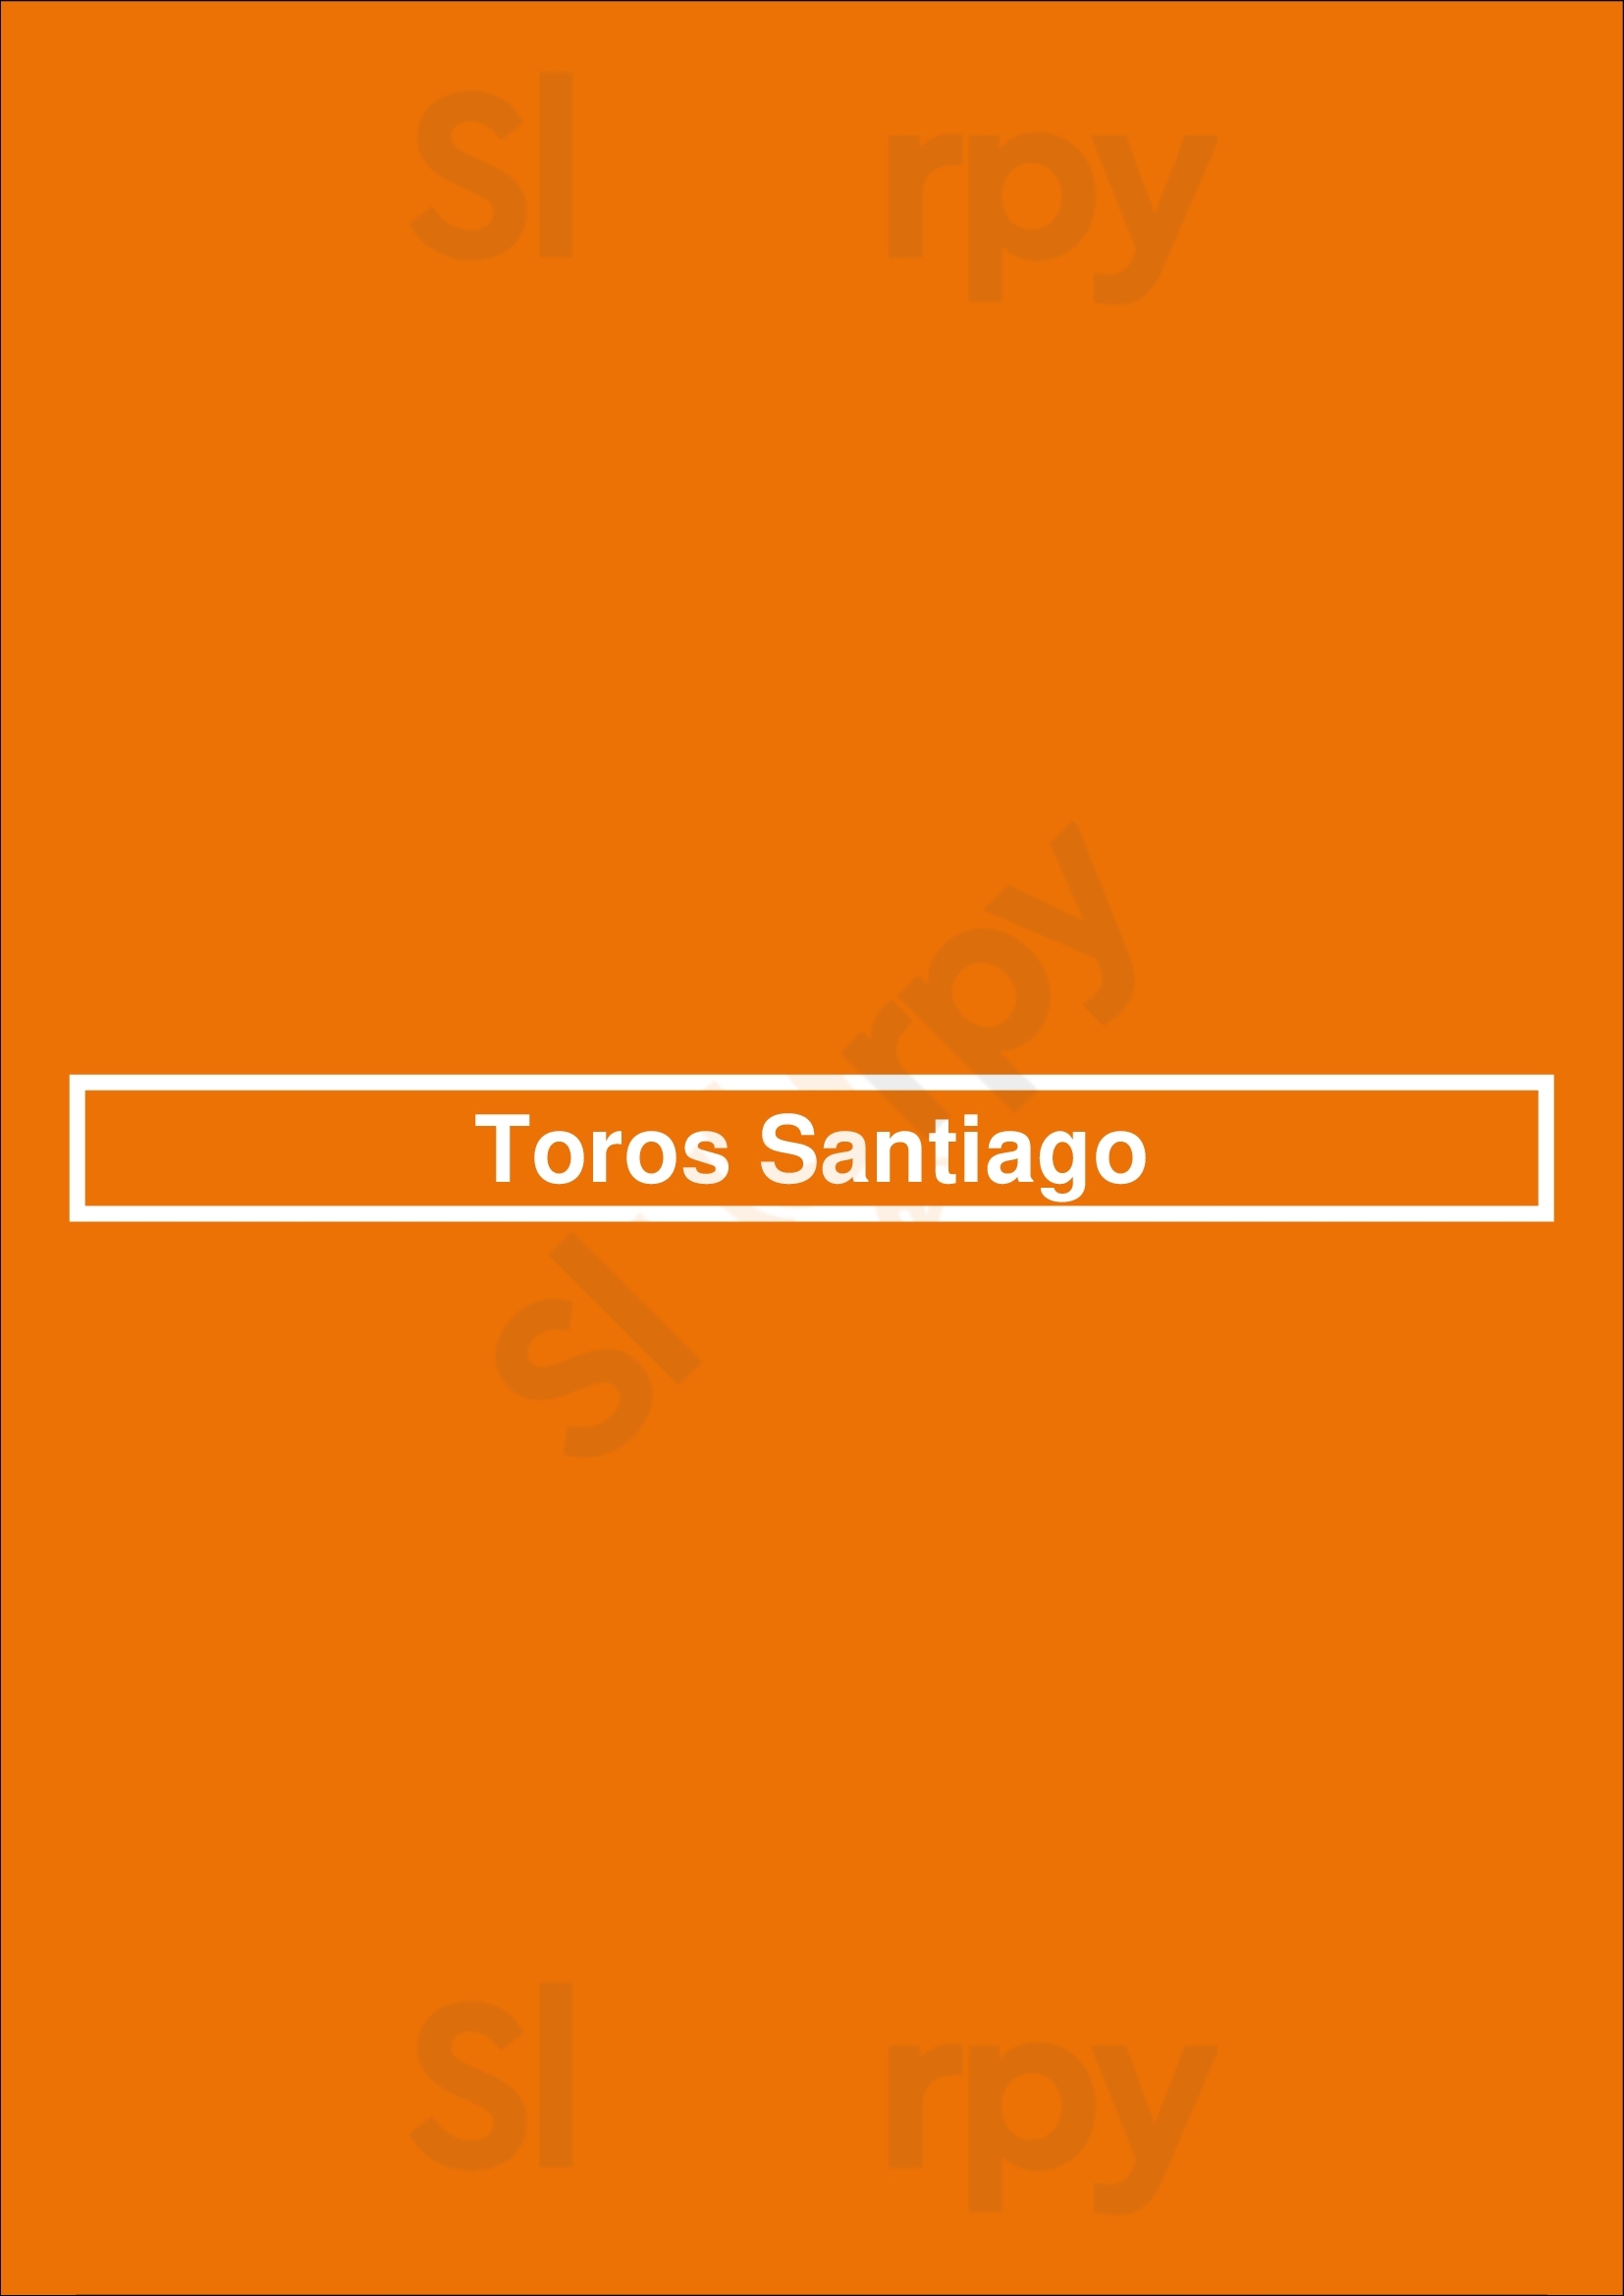 Toros Santiago Den Haag Menu - 1